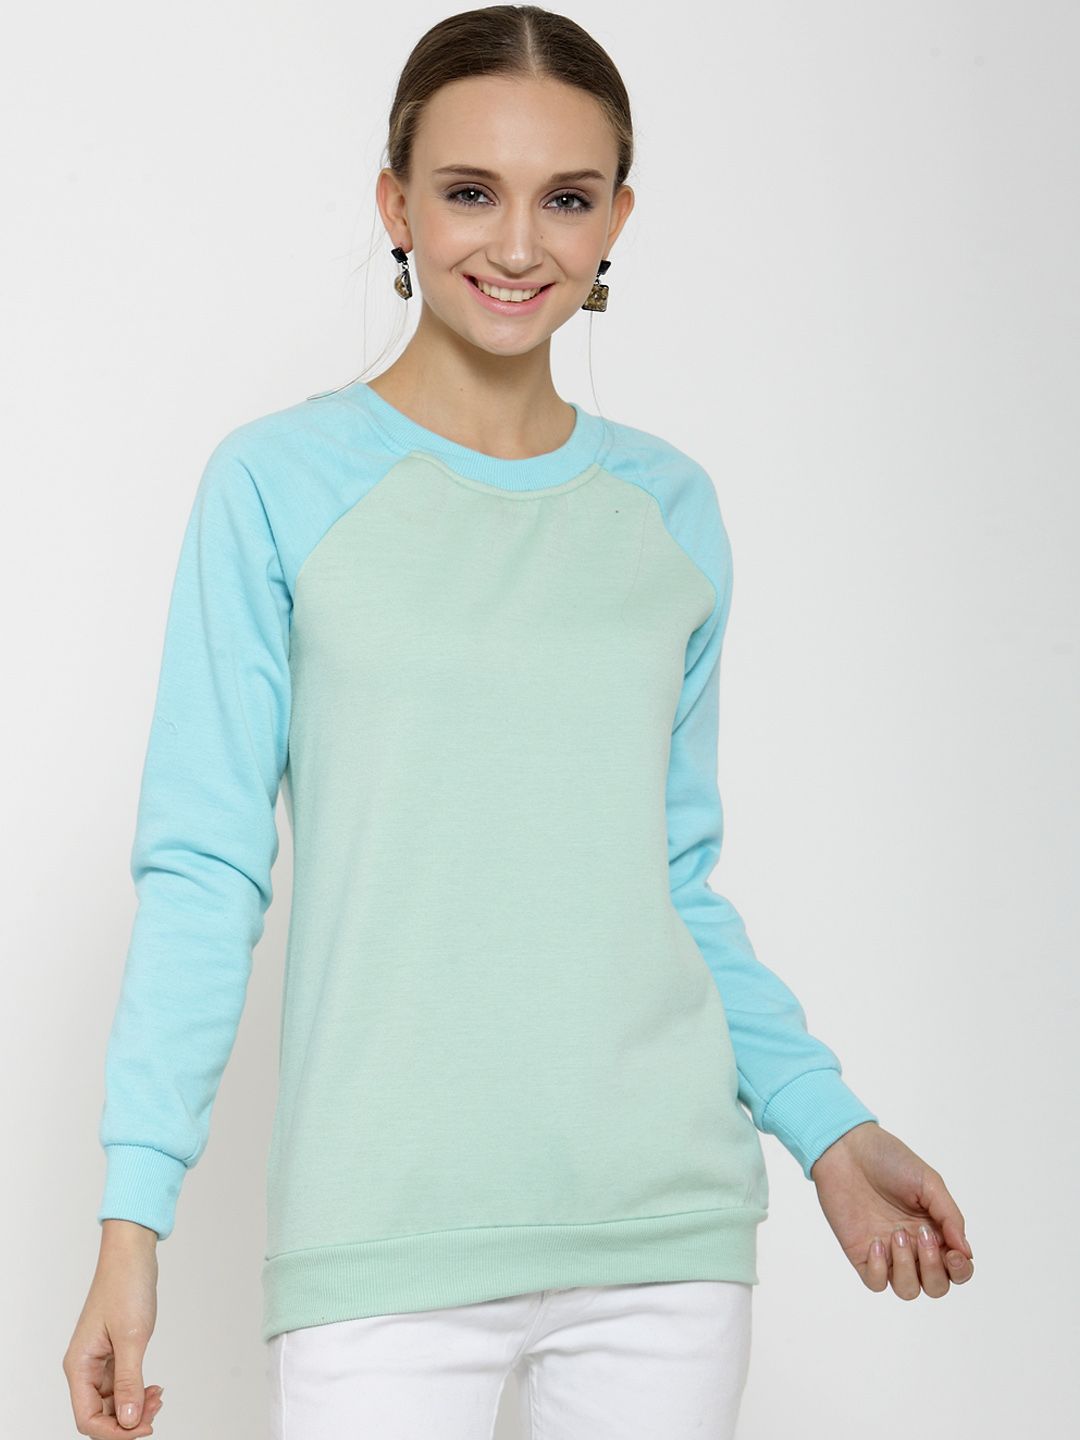 Belle Fille Women Sea Green & Turquoise Blue Colourblocked Sweatshirt Price in India